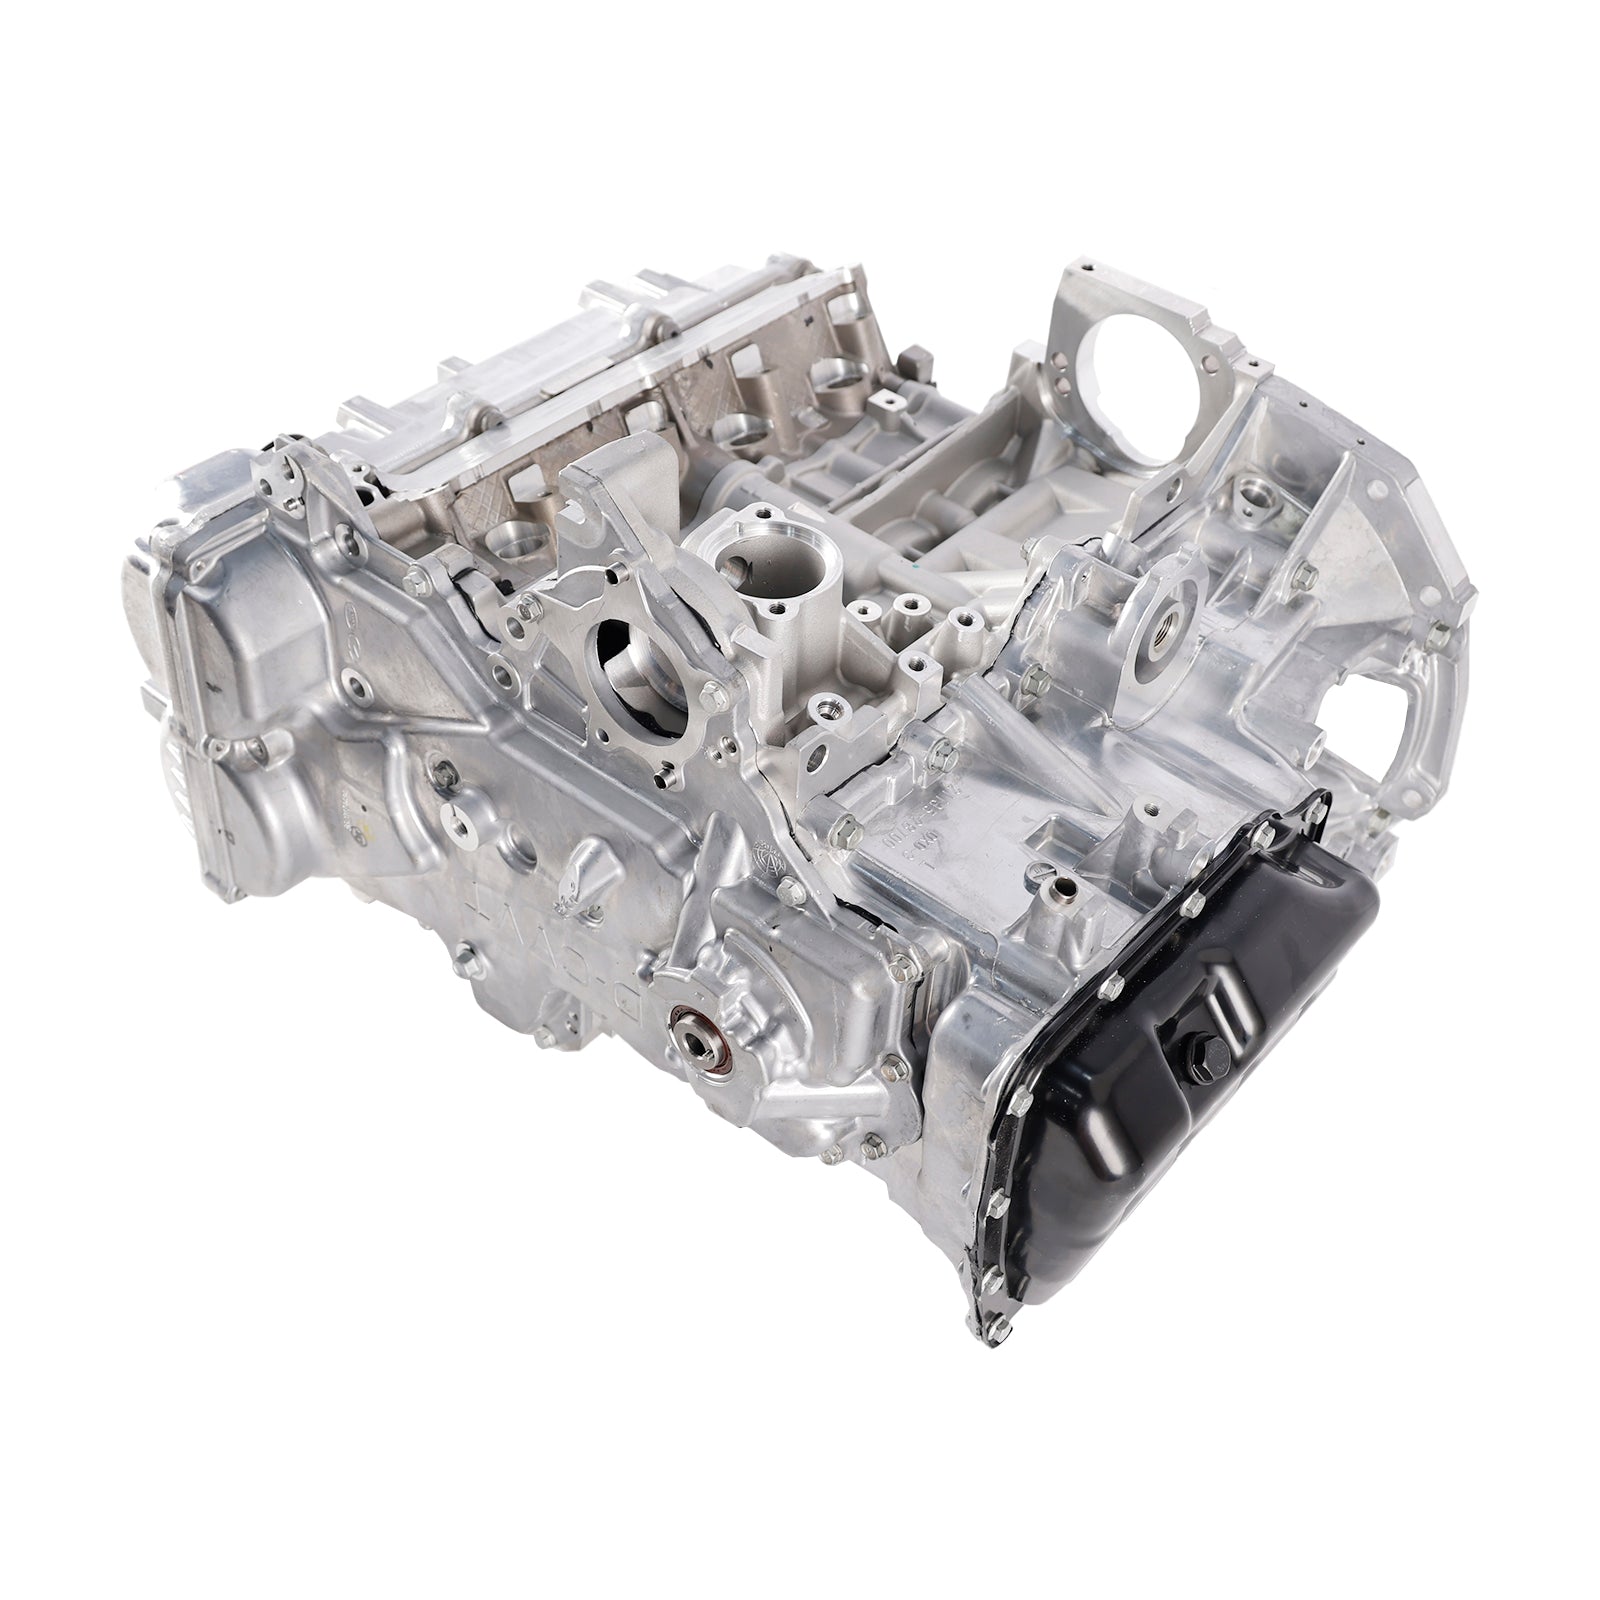 G4FJ New Engine Assembly 1.6T For Hyundai Tucson Sonata Elantra Kia Optima Soul